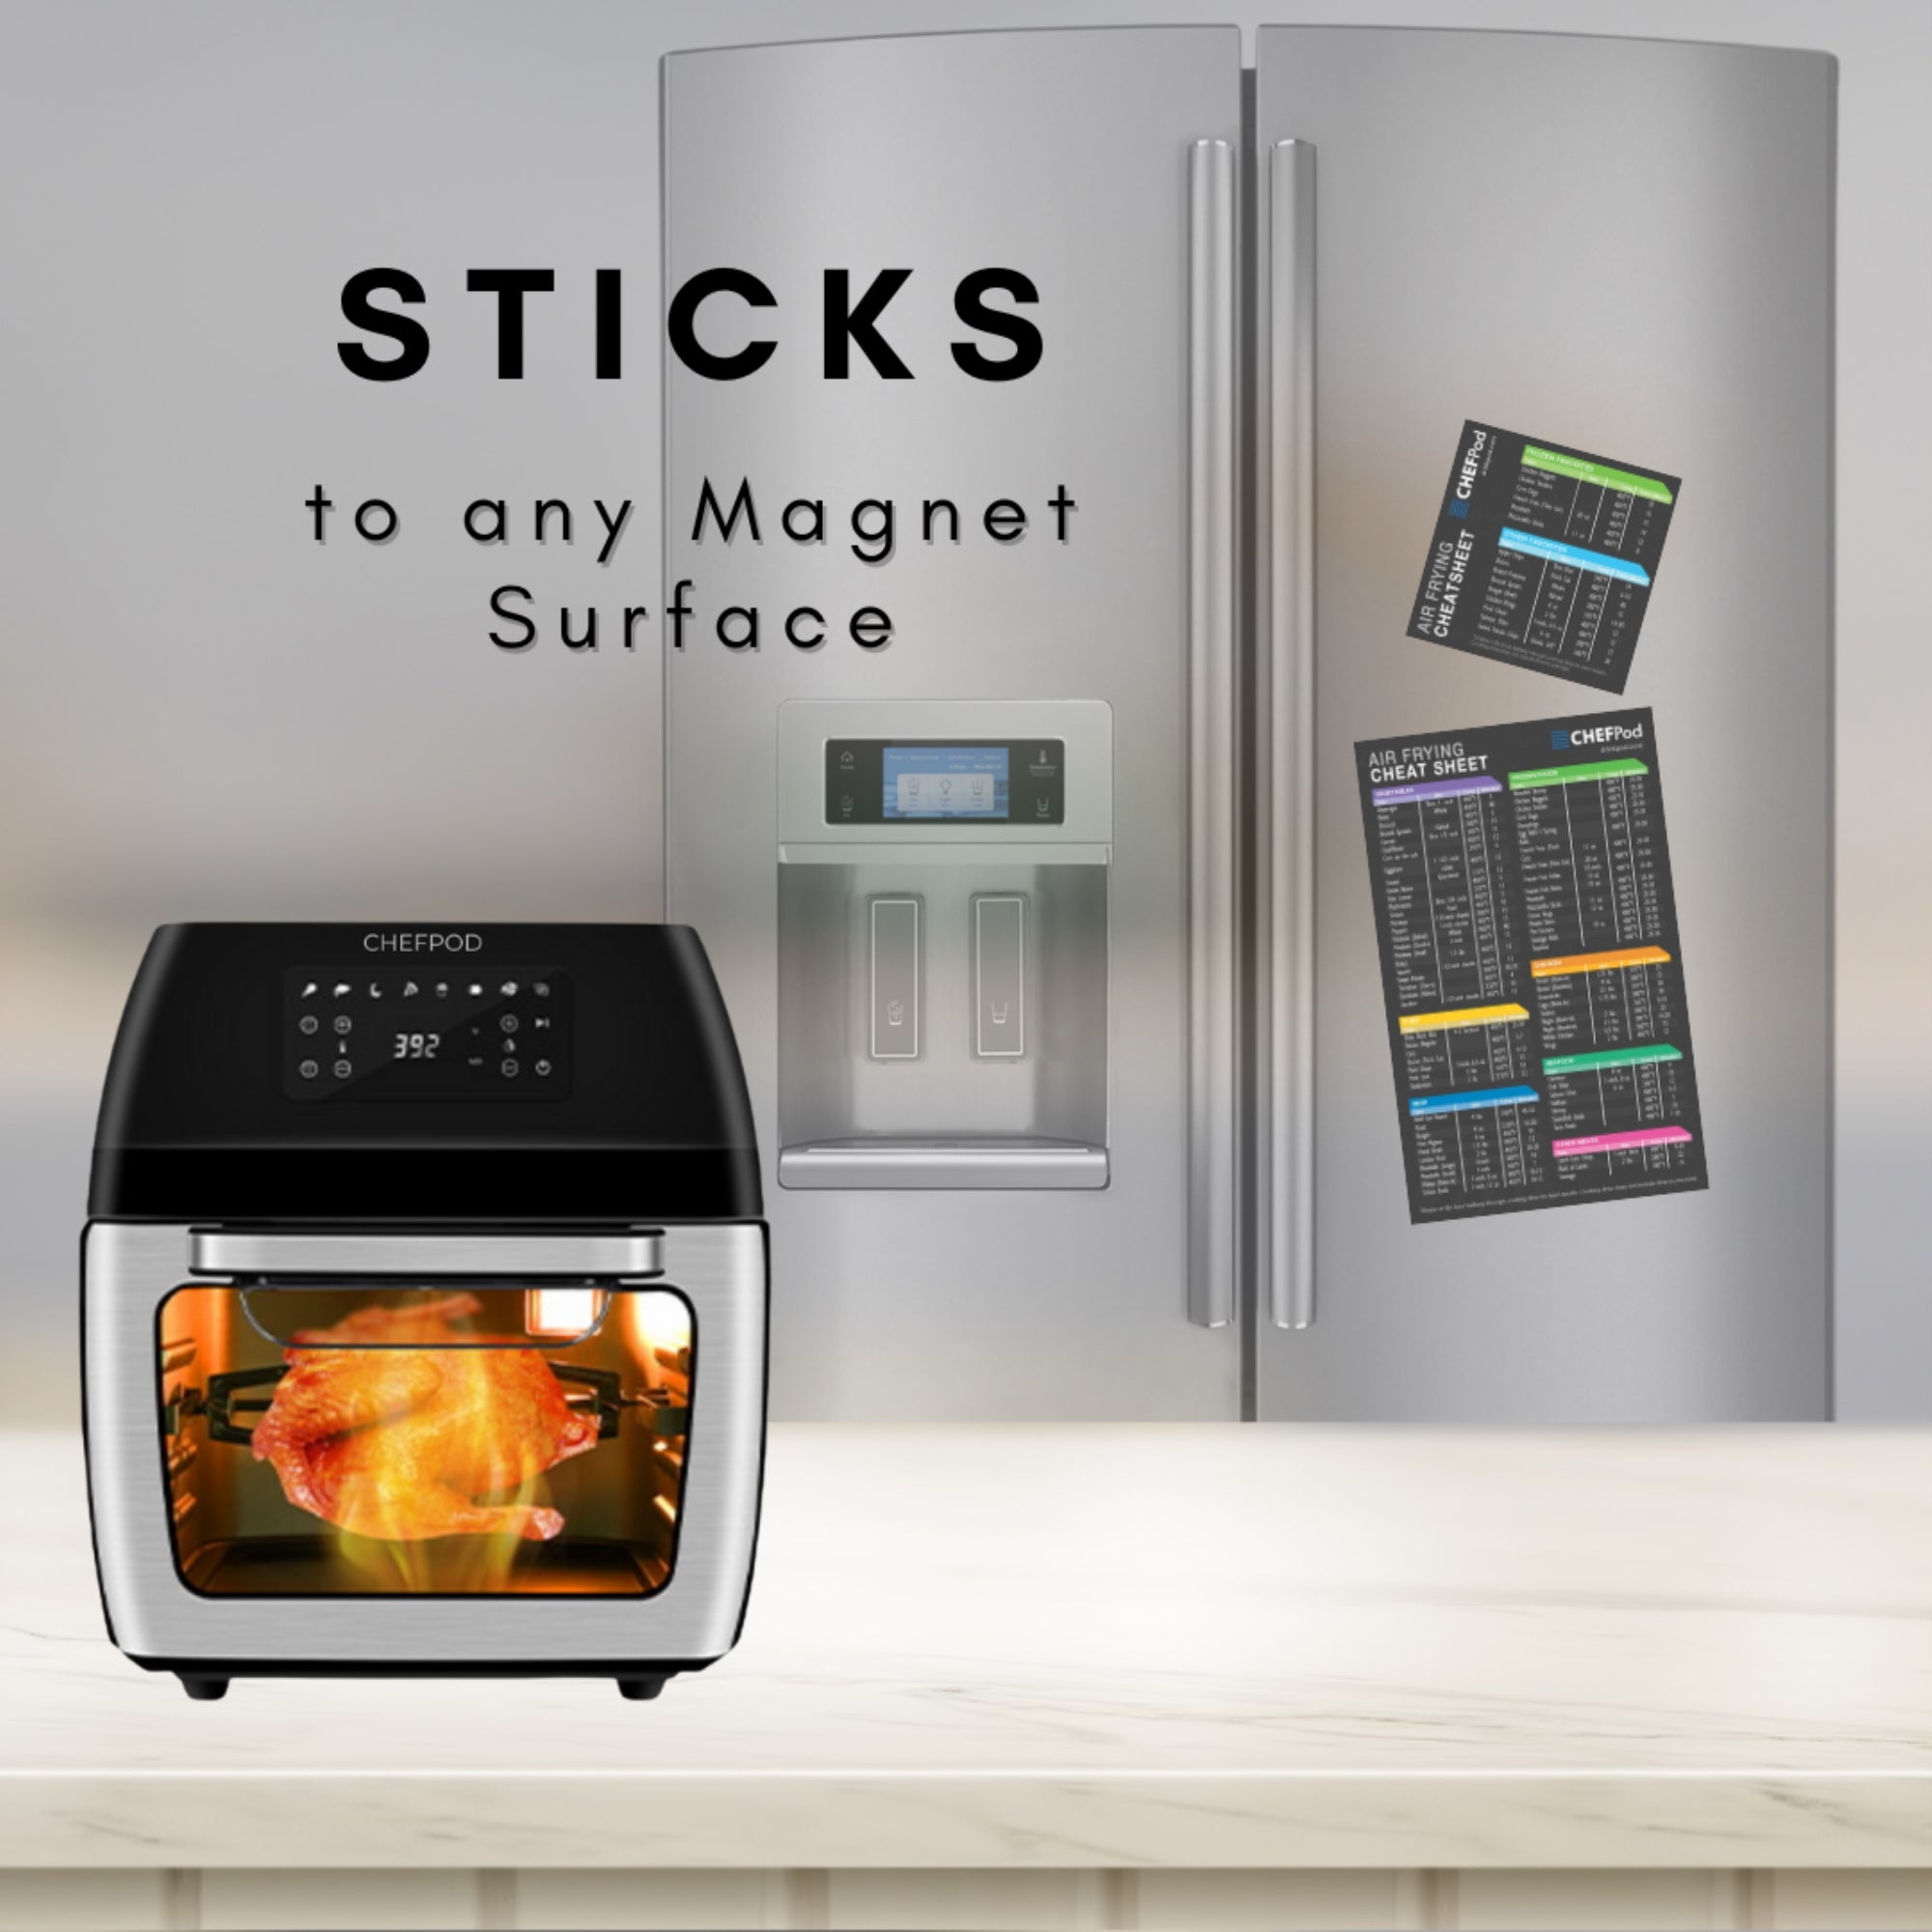 Chefpod Pro 13 qt. Stainless Steel Air Fryer Oven Digital Touchscreen